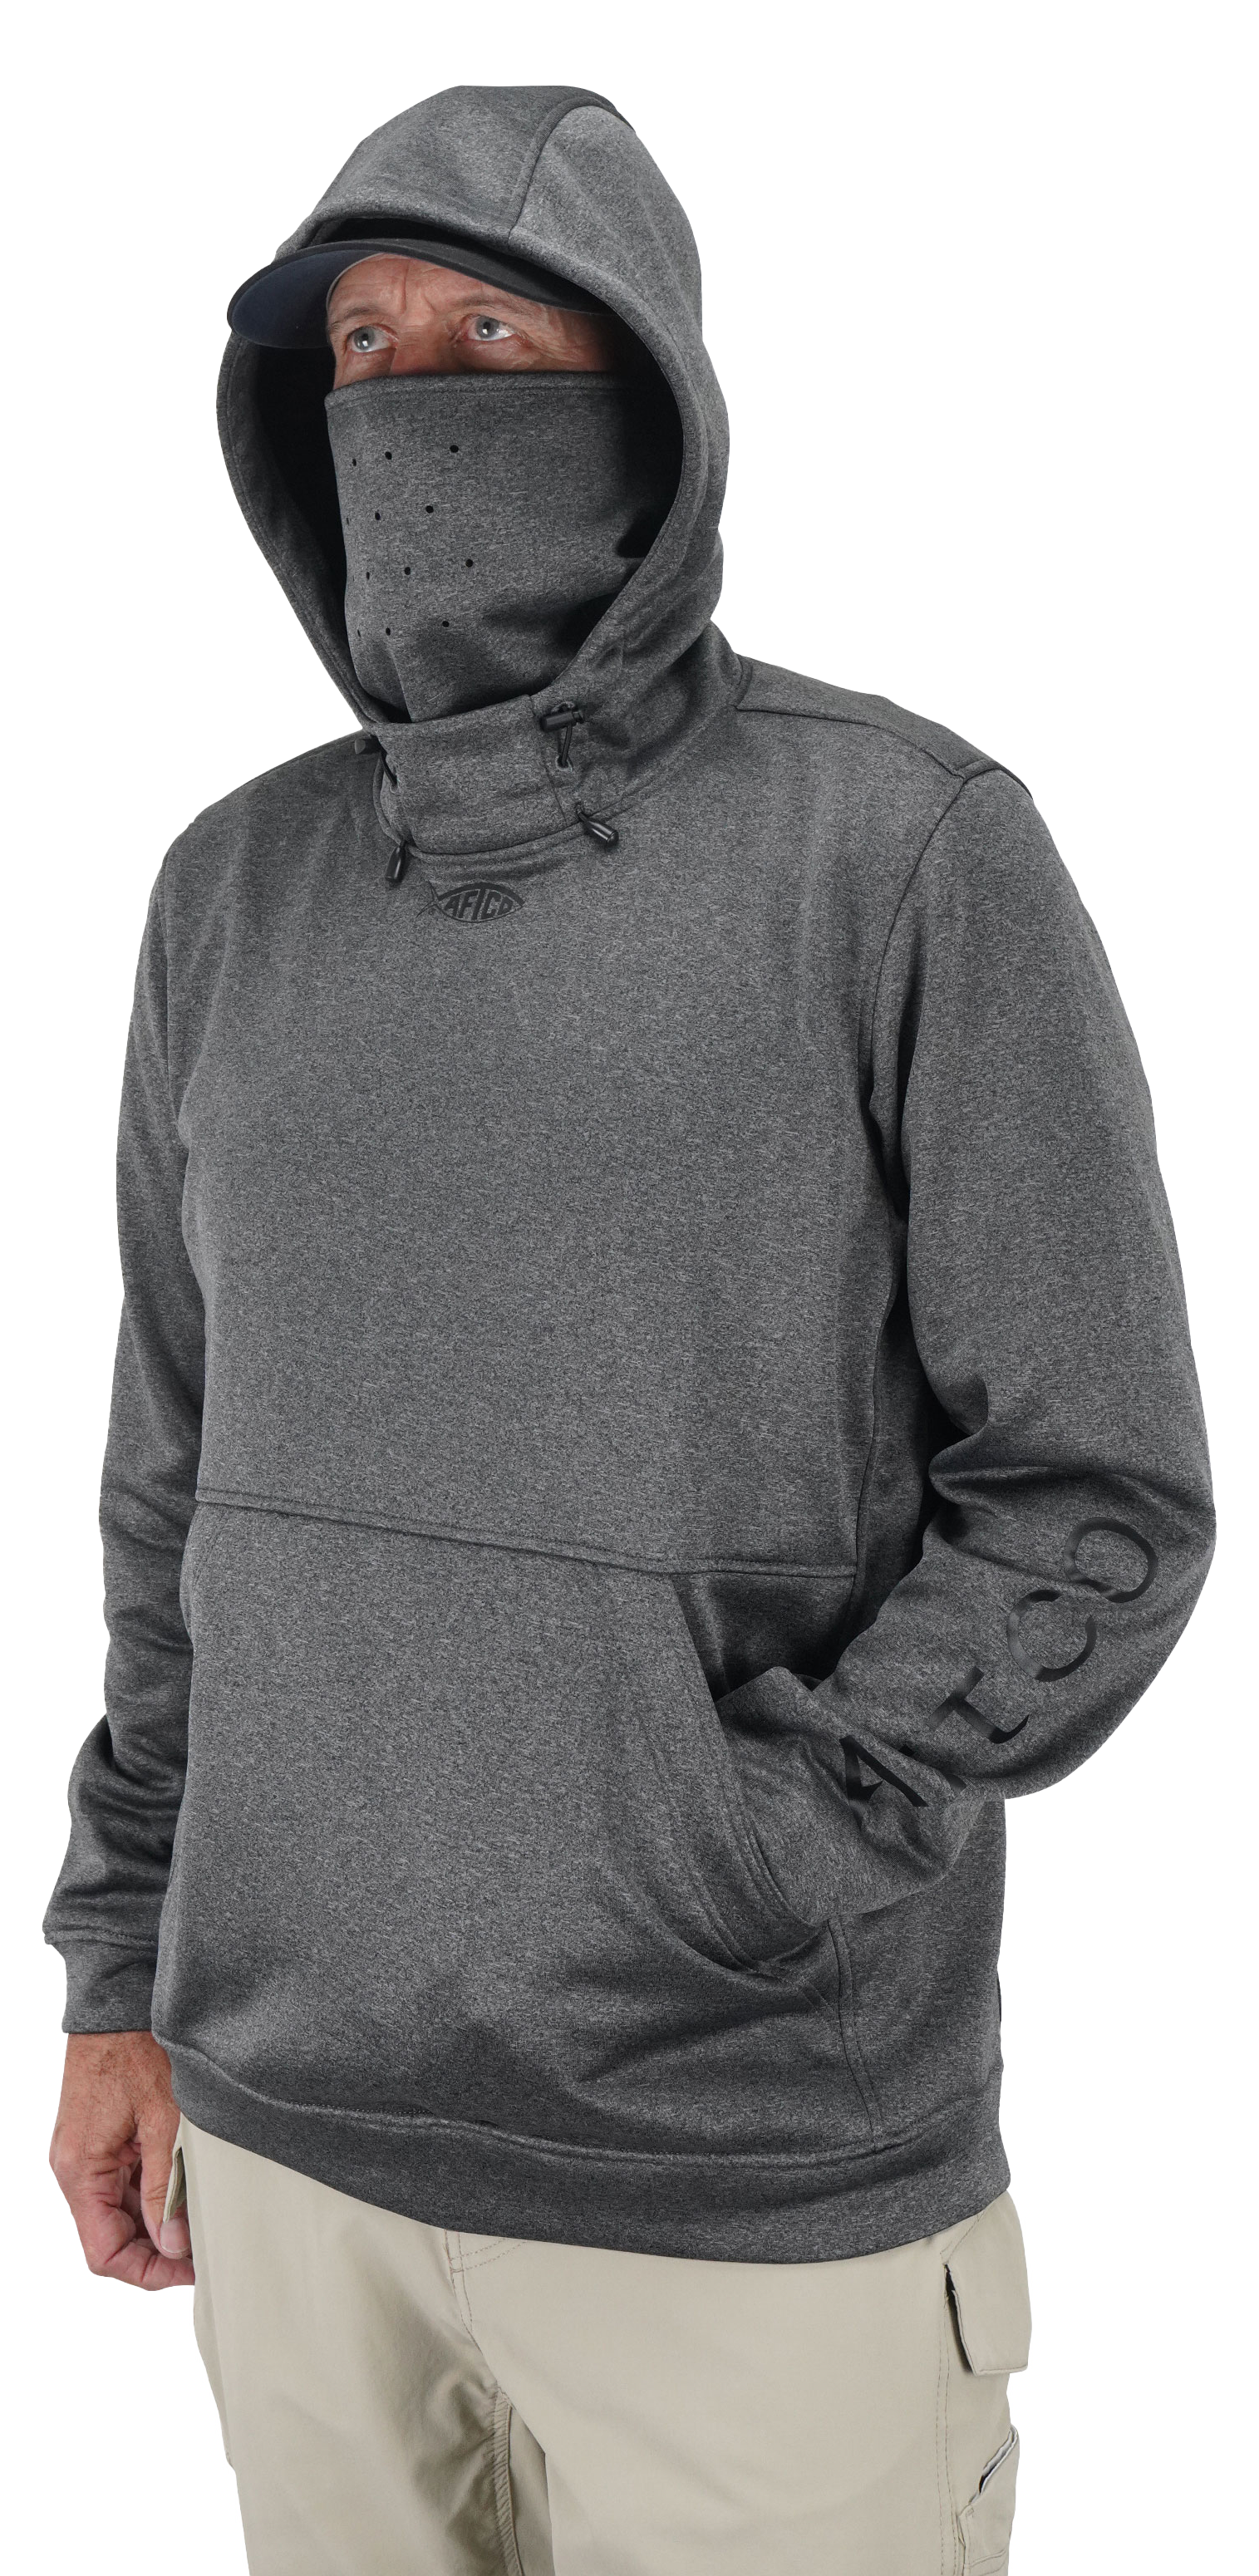 AFTCO Reaper Technical Sweatshirt - Charcoal Heather - XL